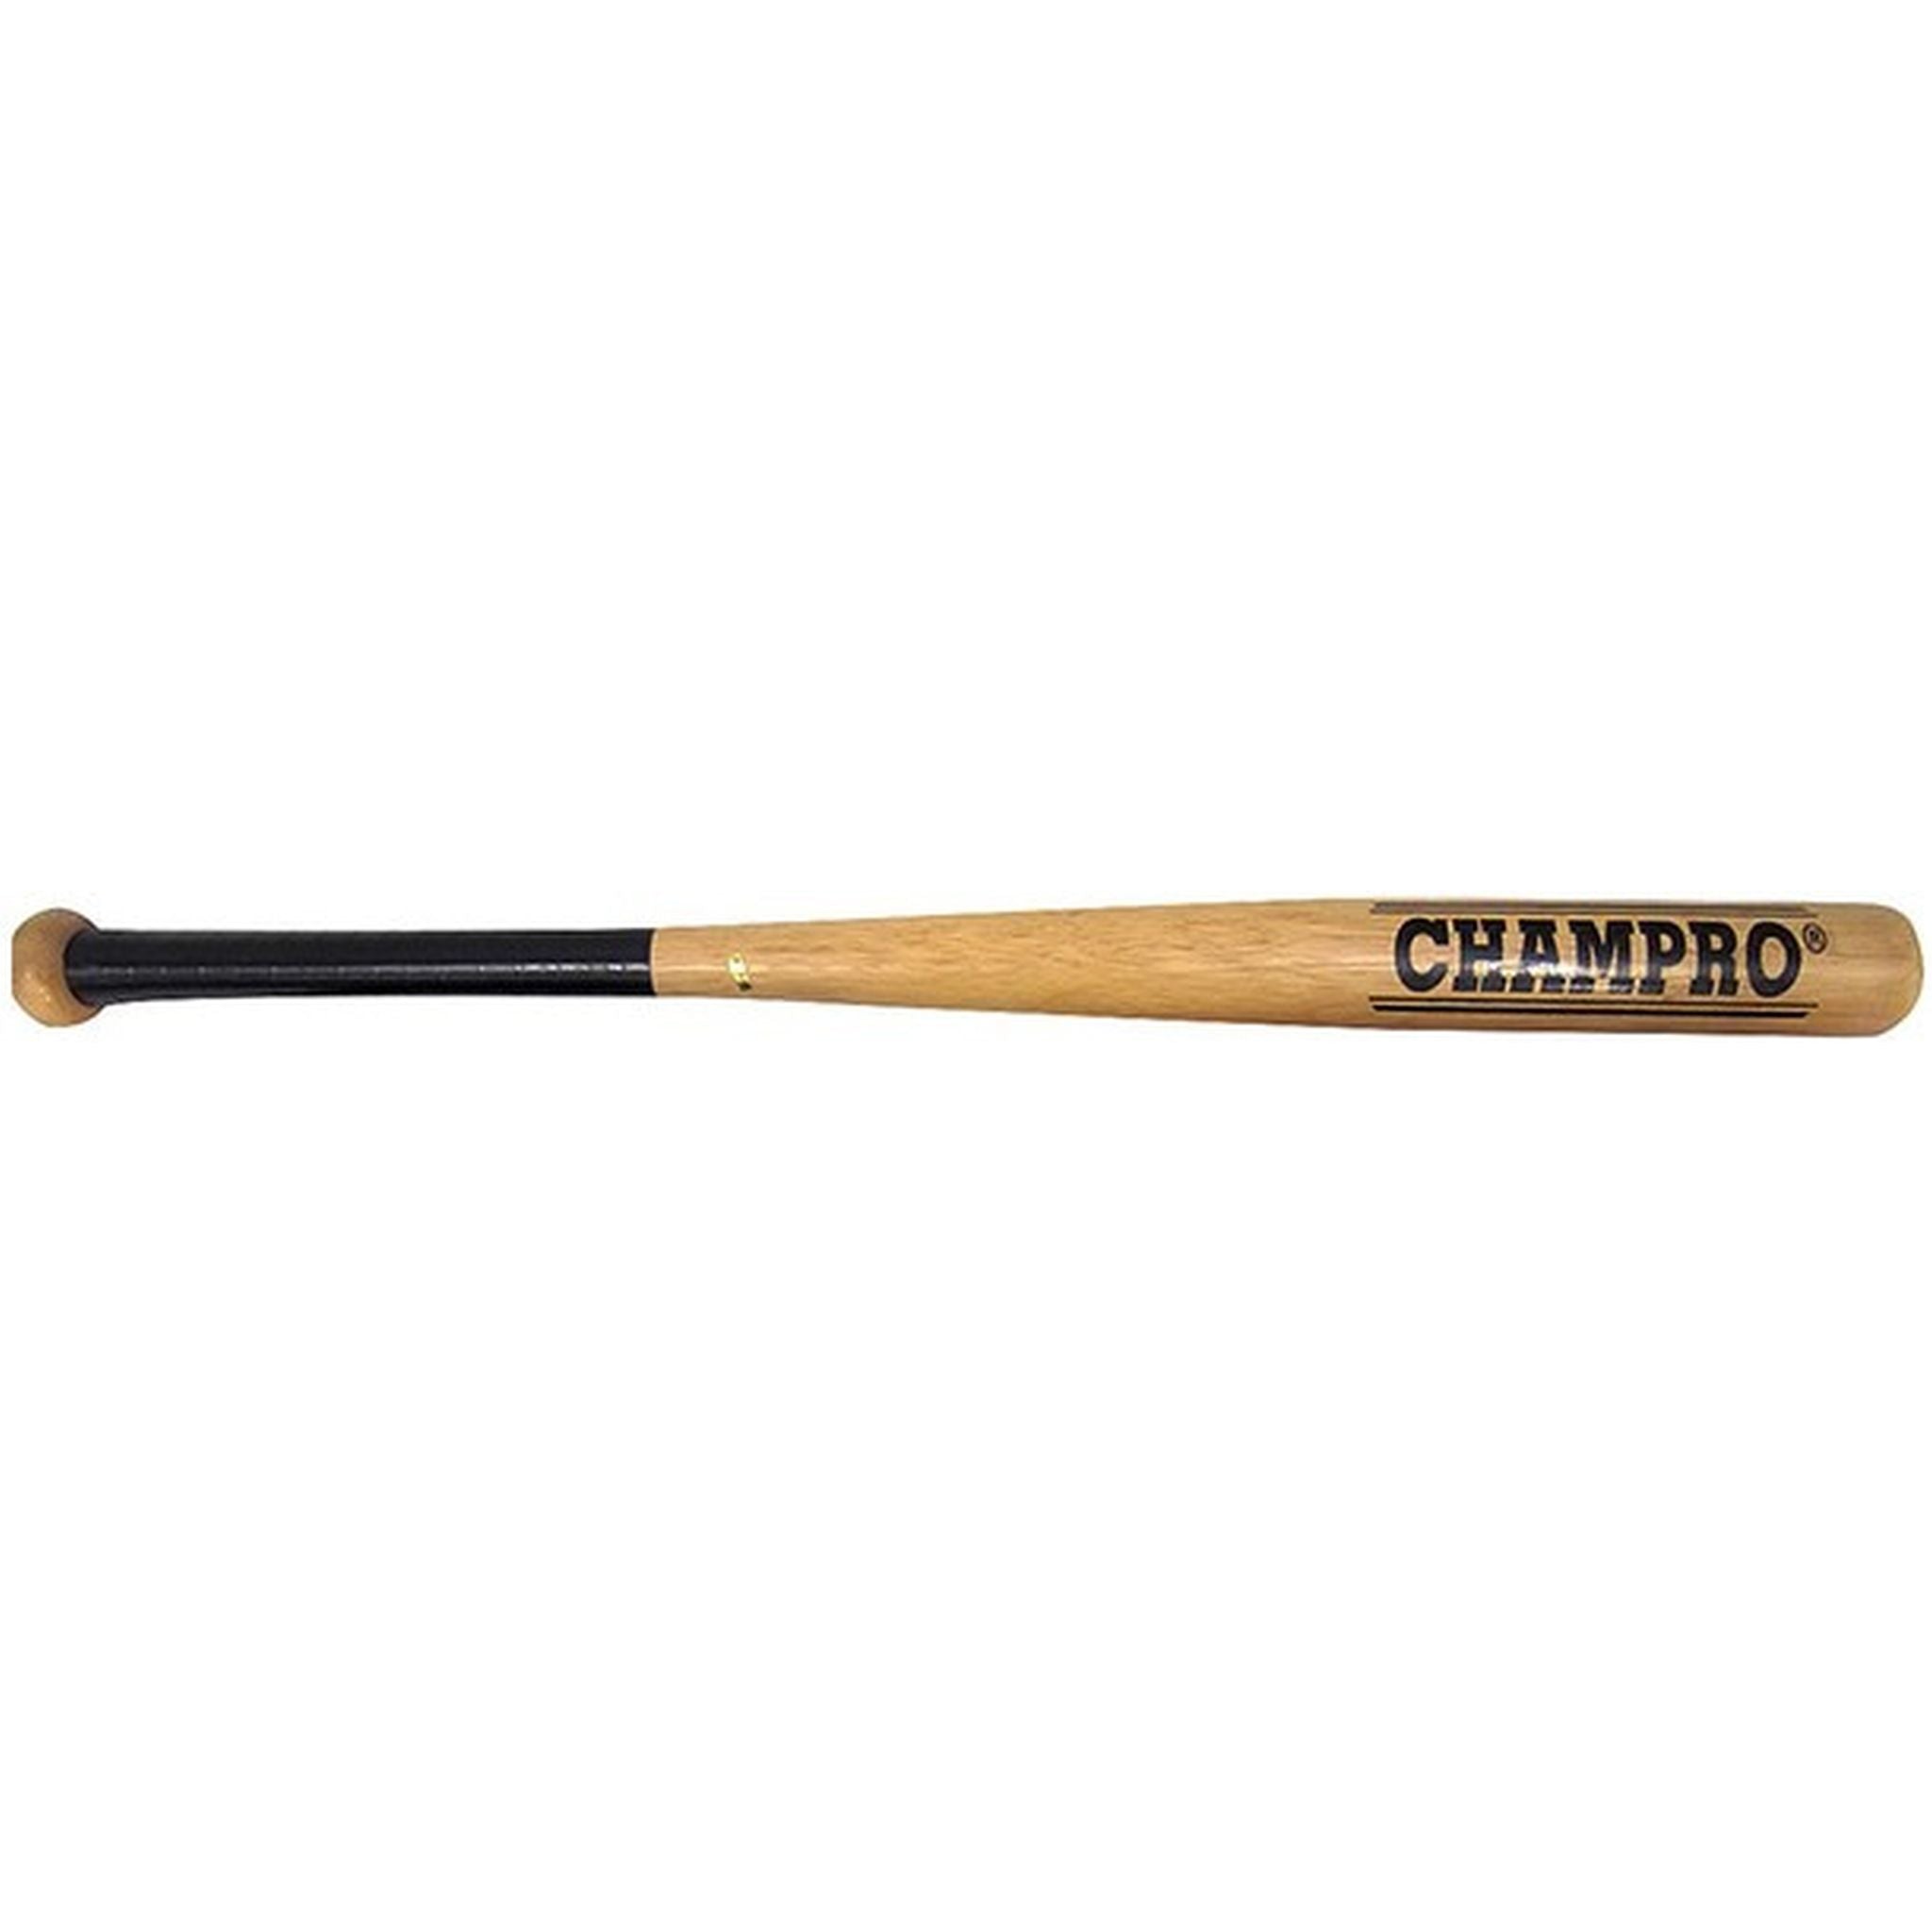 Champro Wood 30-inch Teeball Bat